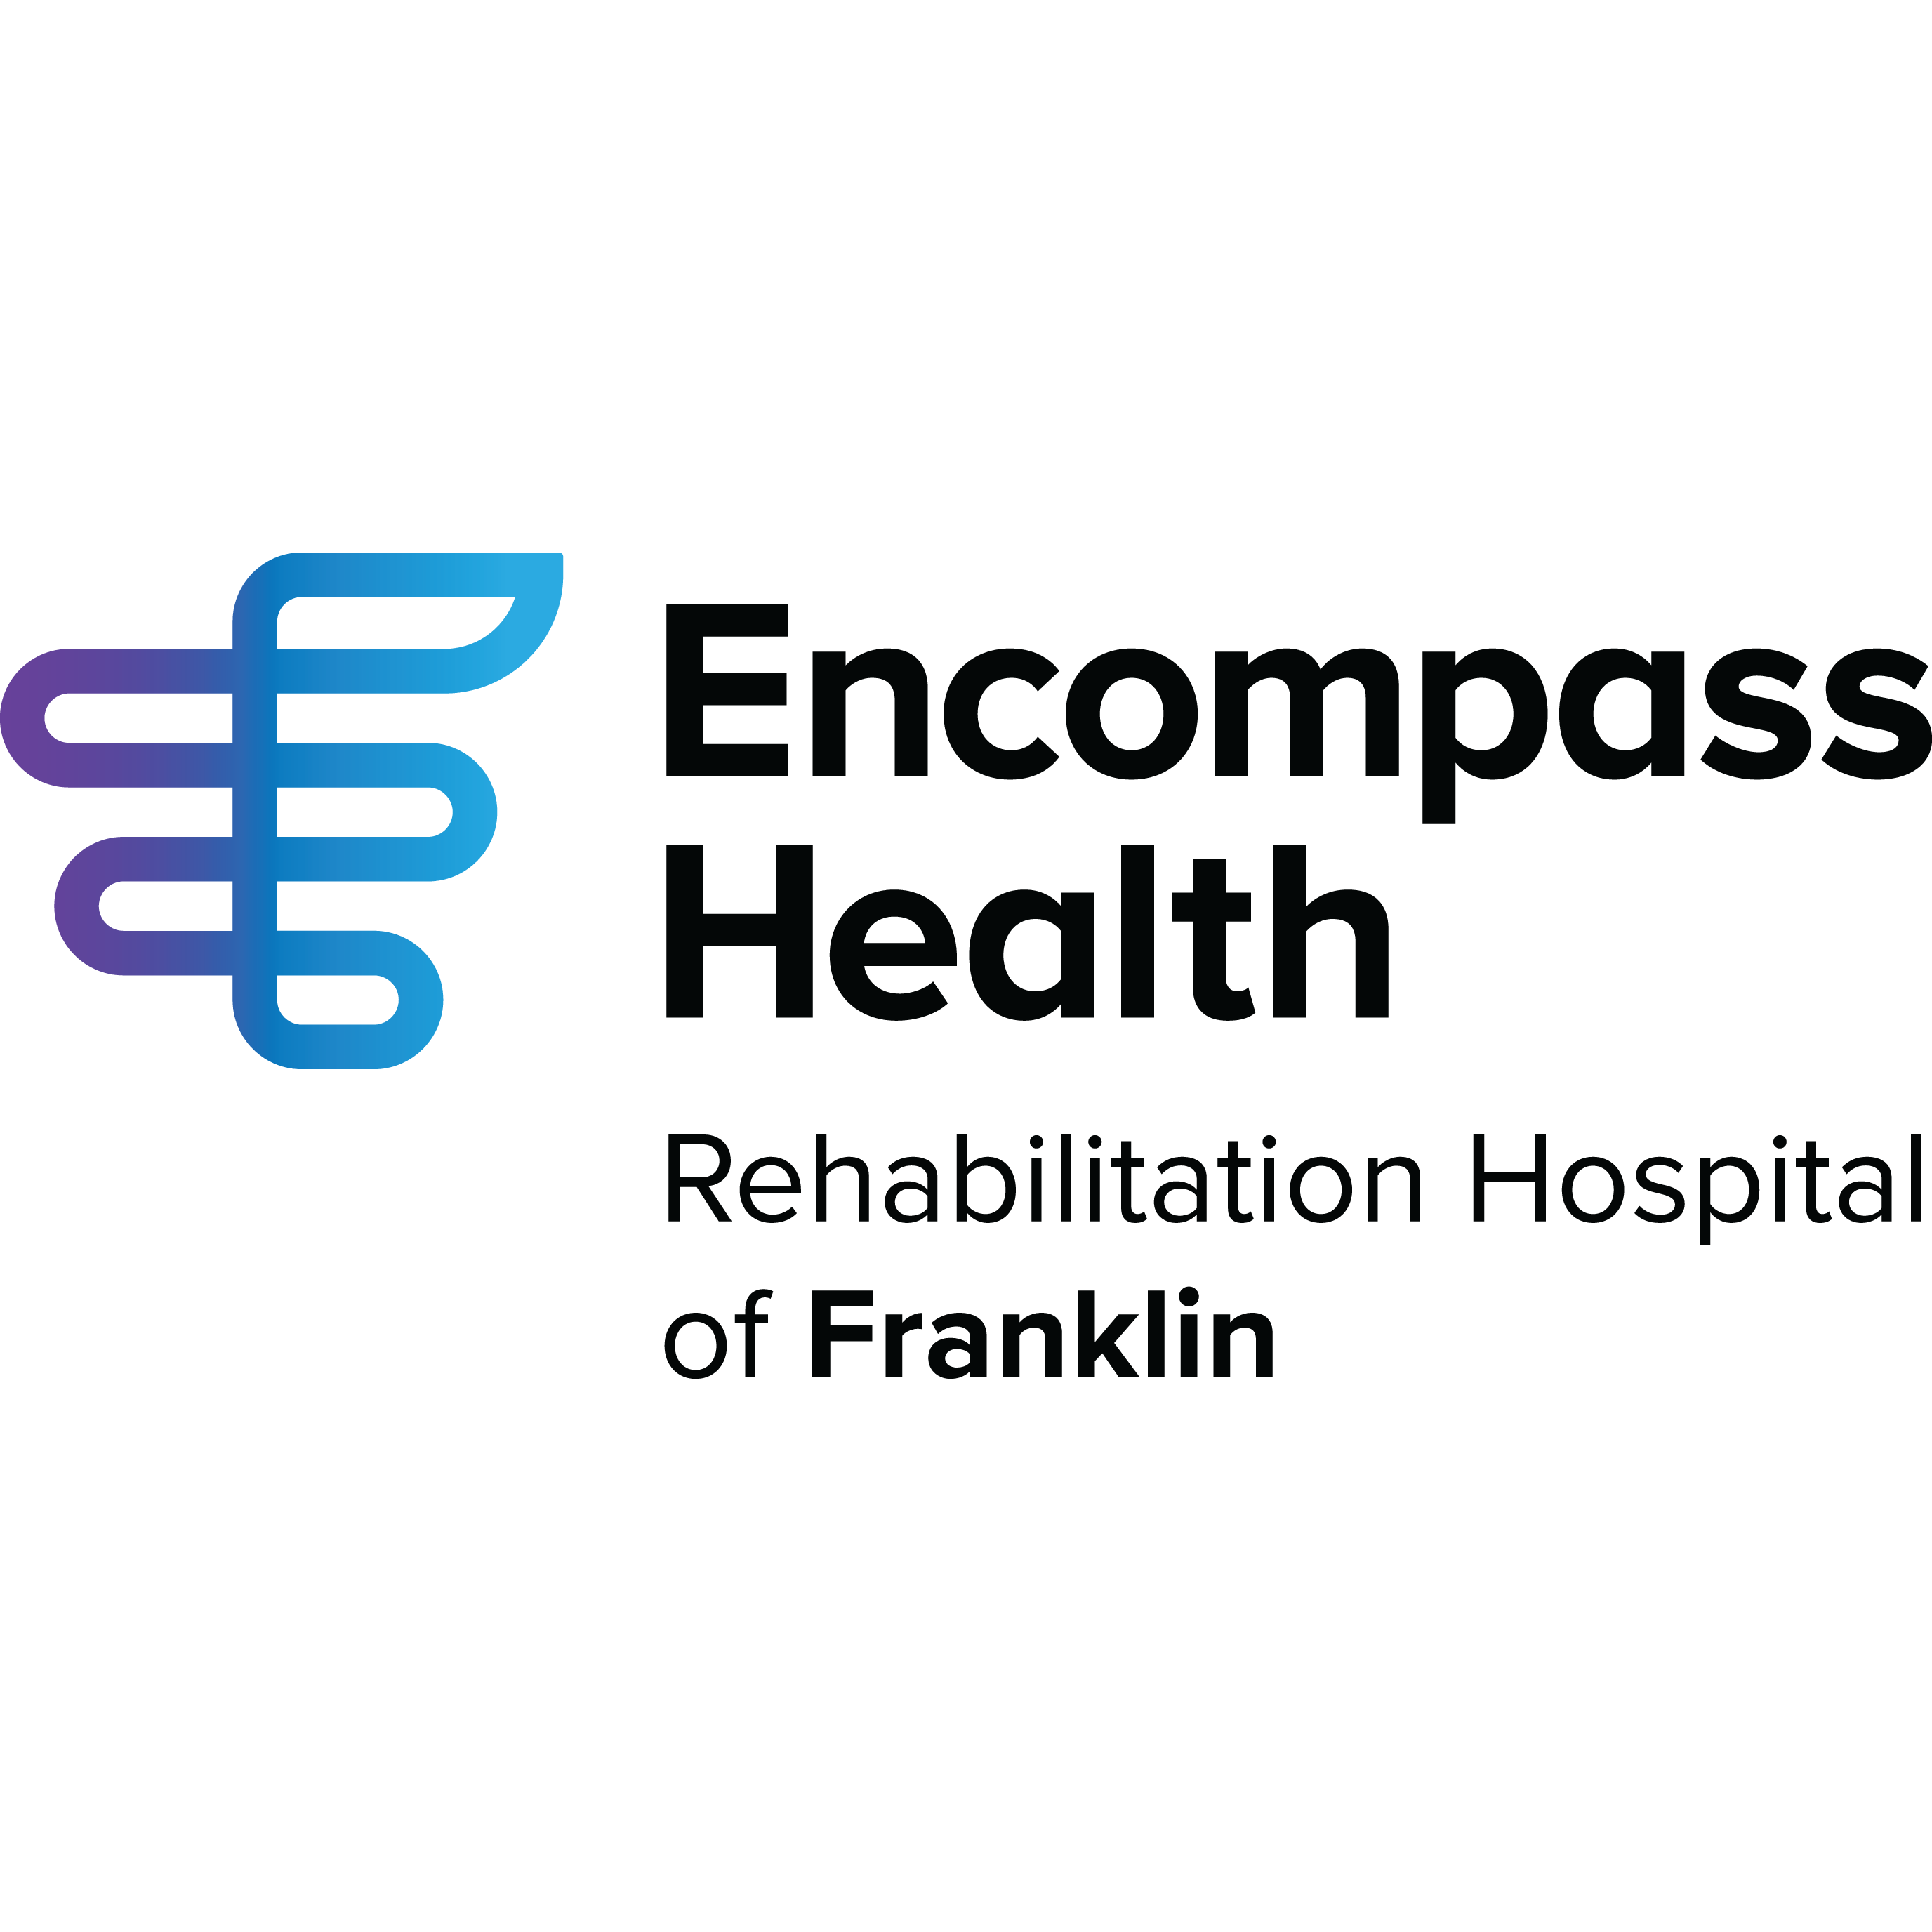 Encompass Health Rehabilitation Hospital of Franklin